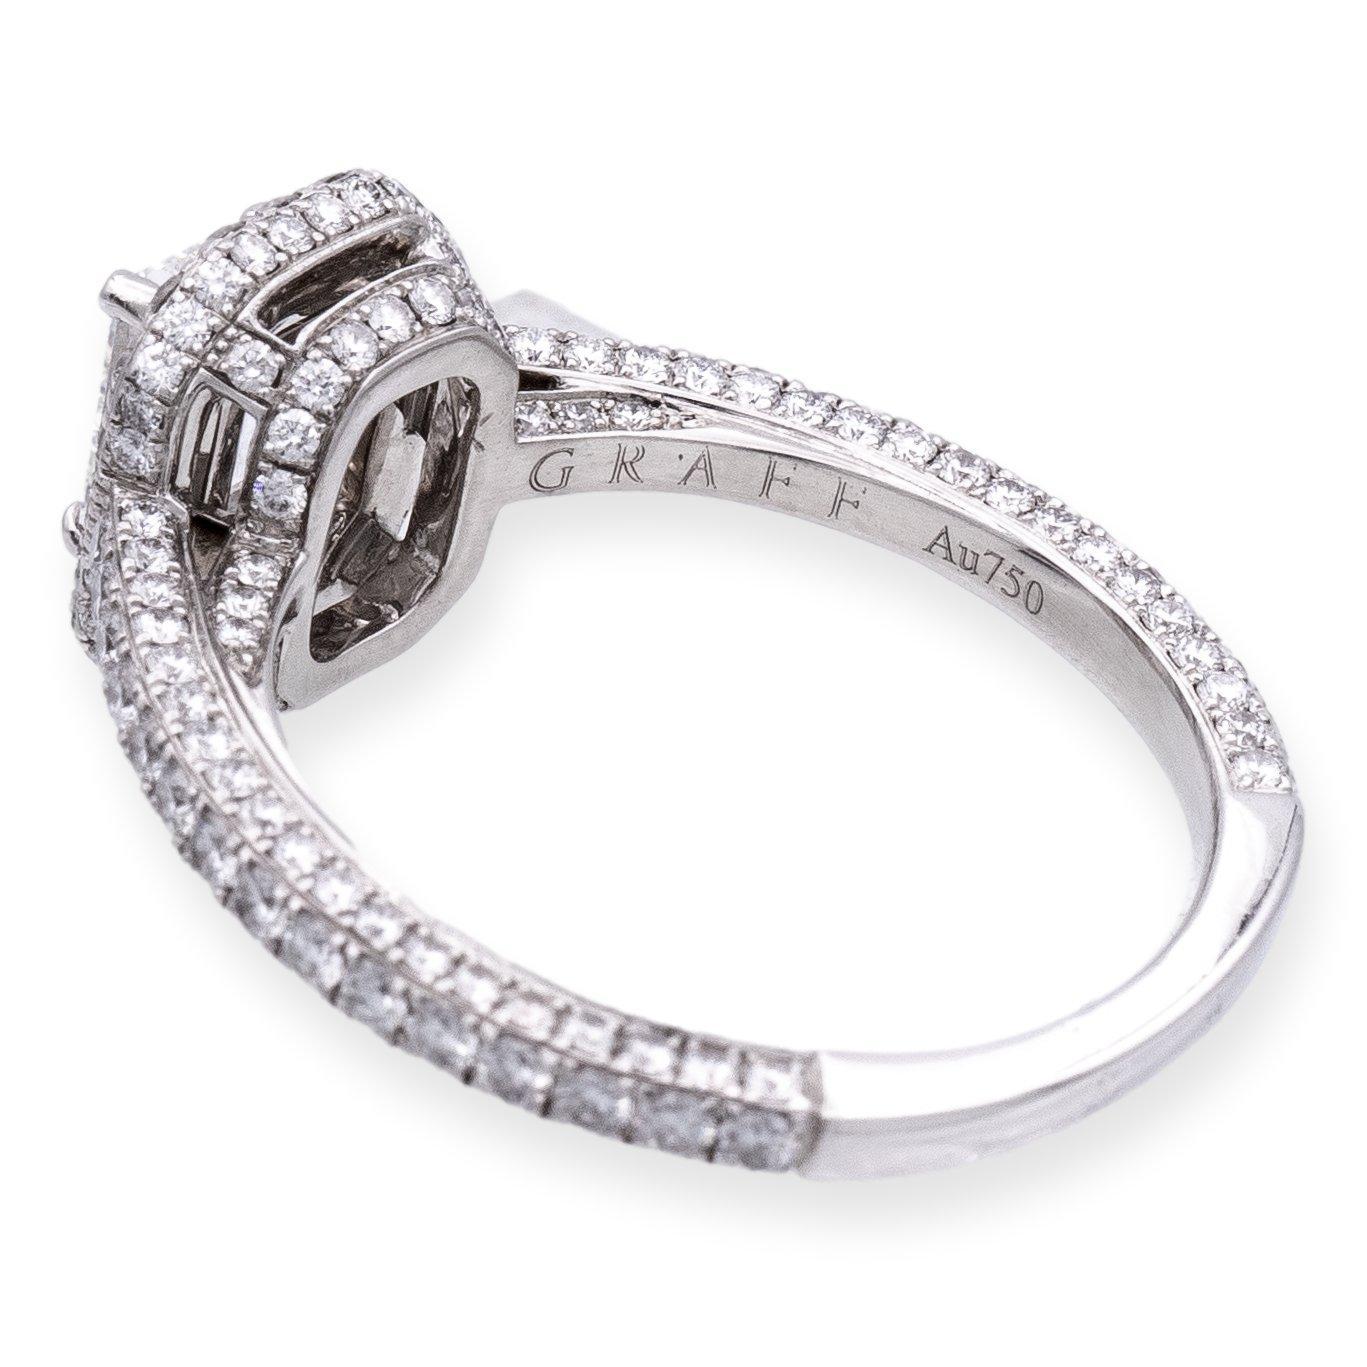 GRAFF 18K White Gold GIA Emerald Cut Diamond Engagement Ring  1.85 cts. TW F VS1 1